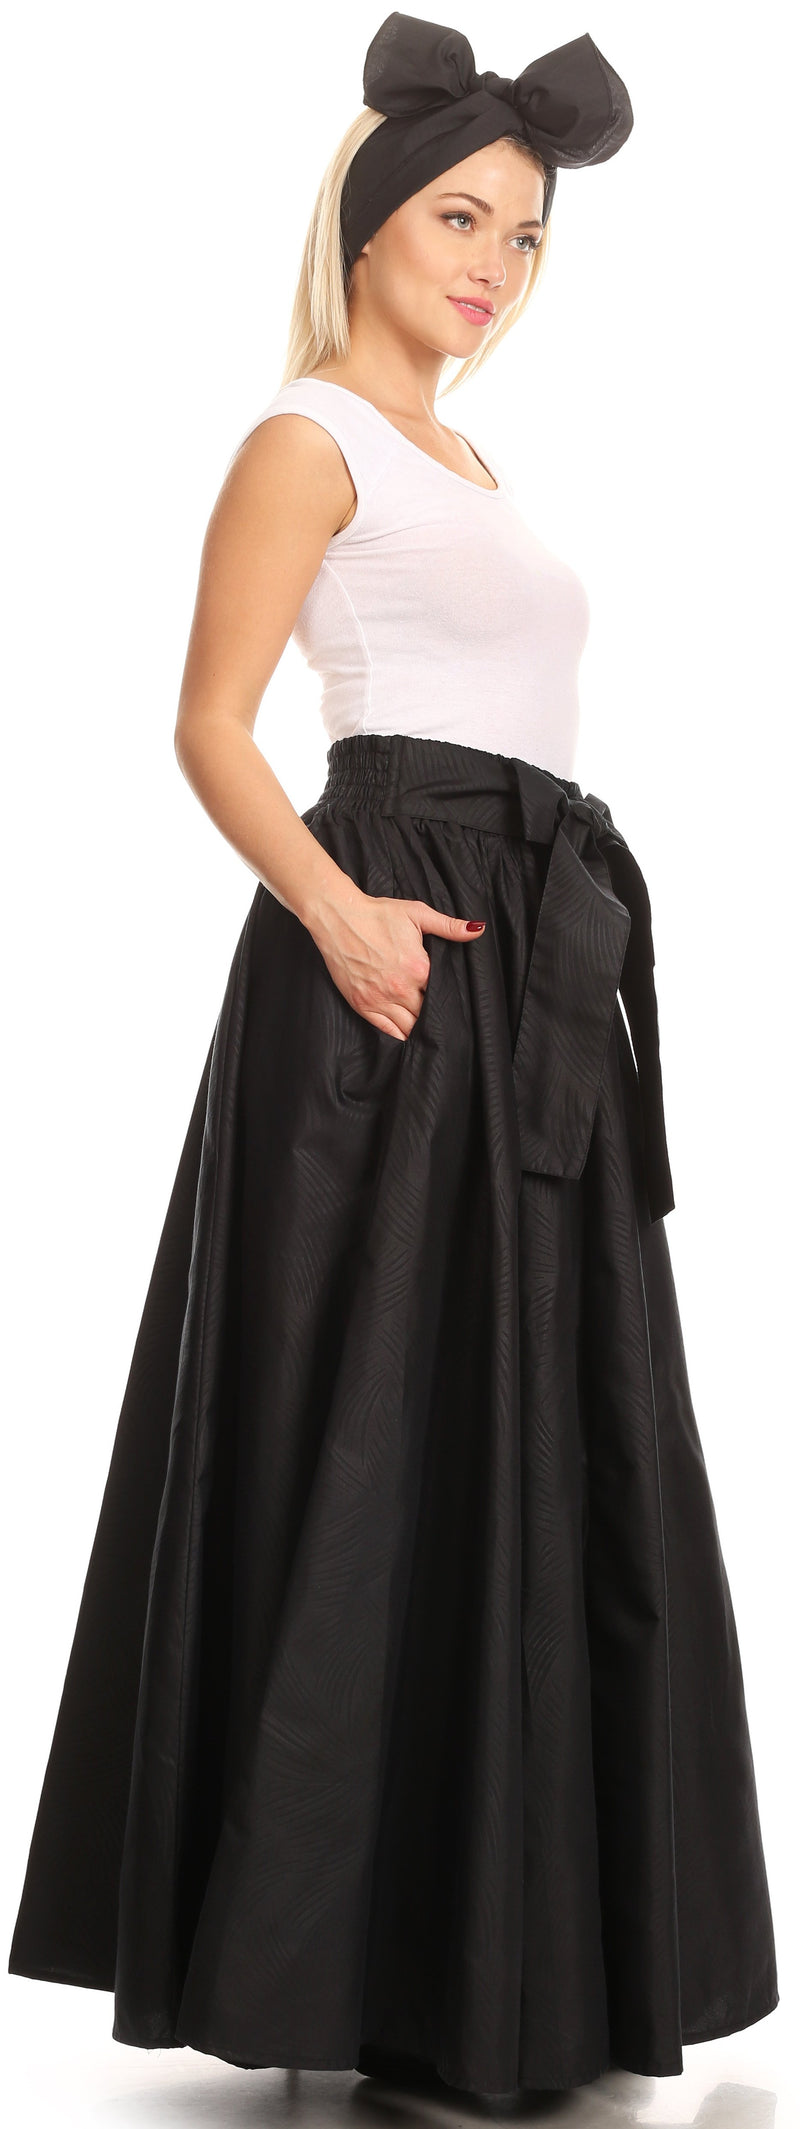 Sakkas Sauda Maxi Long Full Circle Wax Cotton Skirt Casual Gorgeous Basic Boho